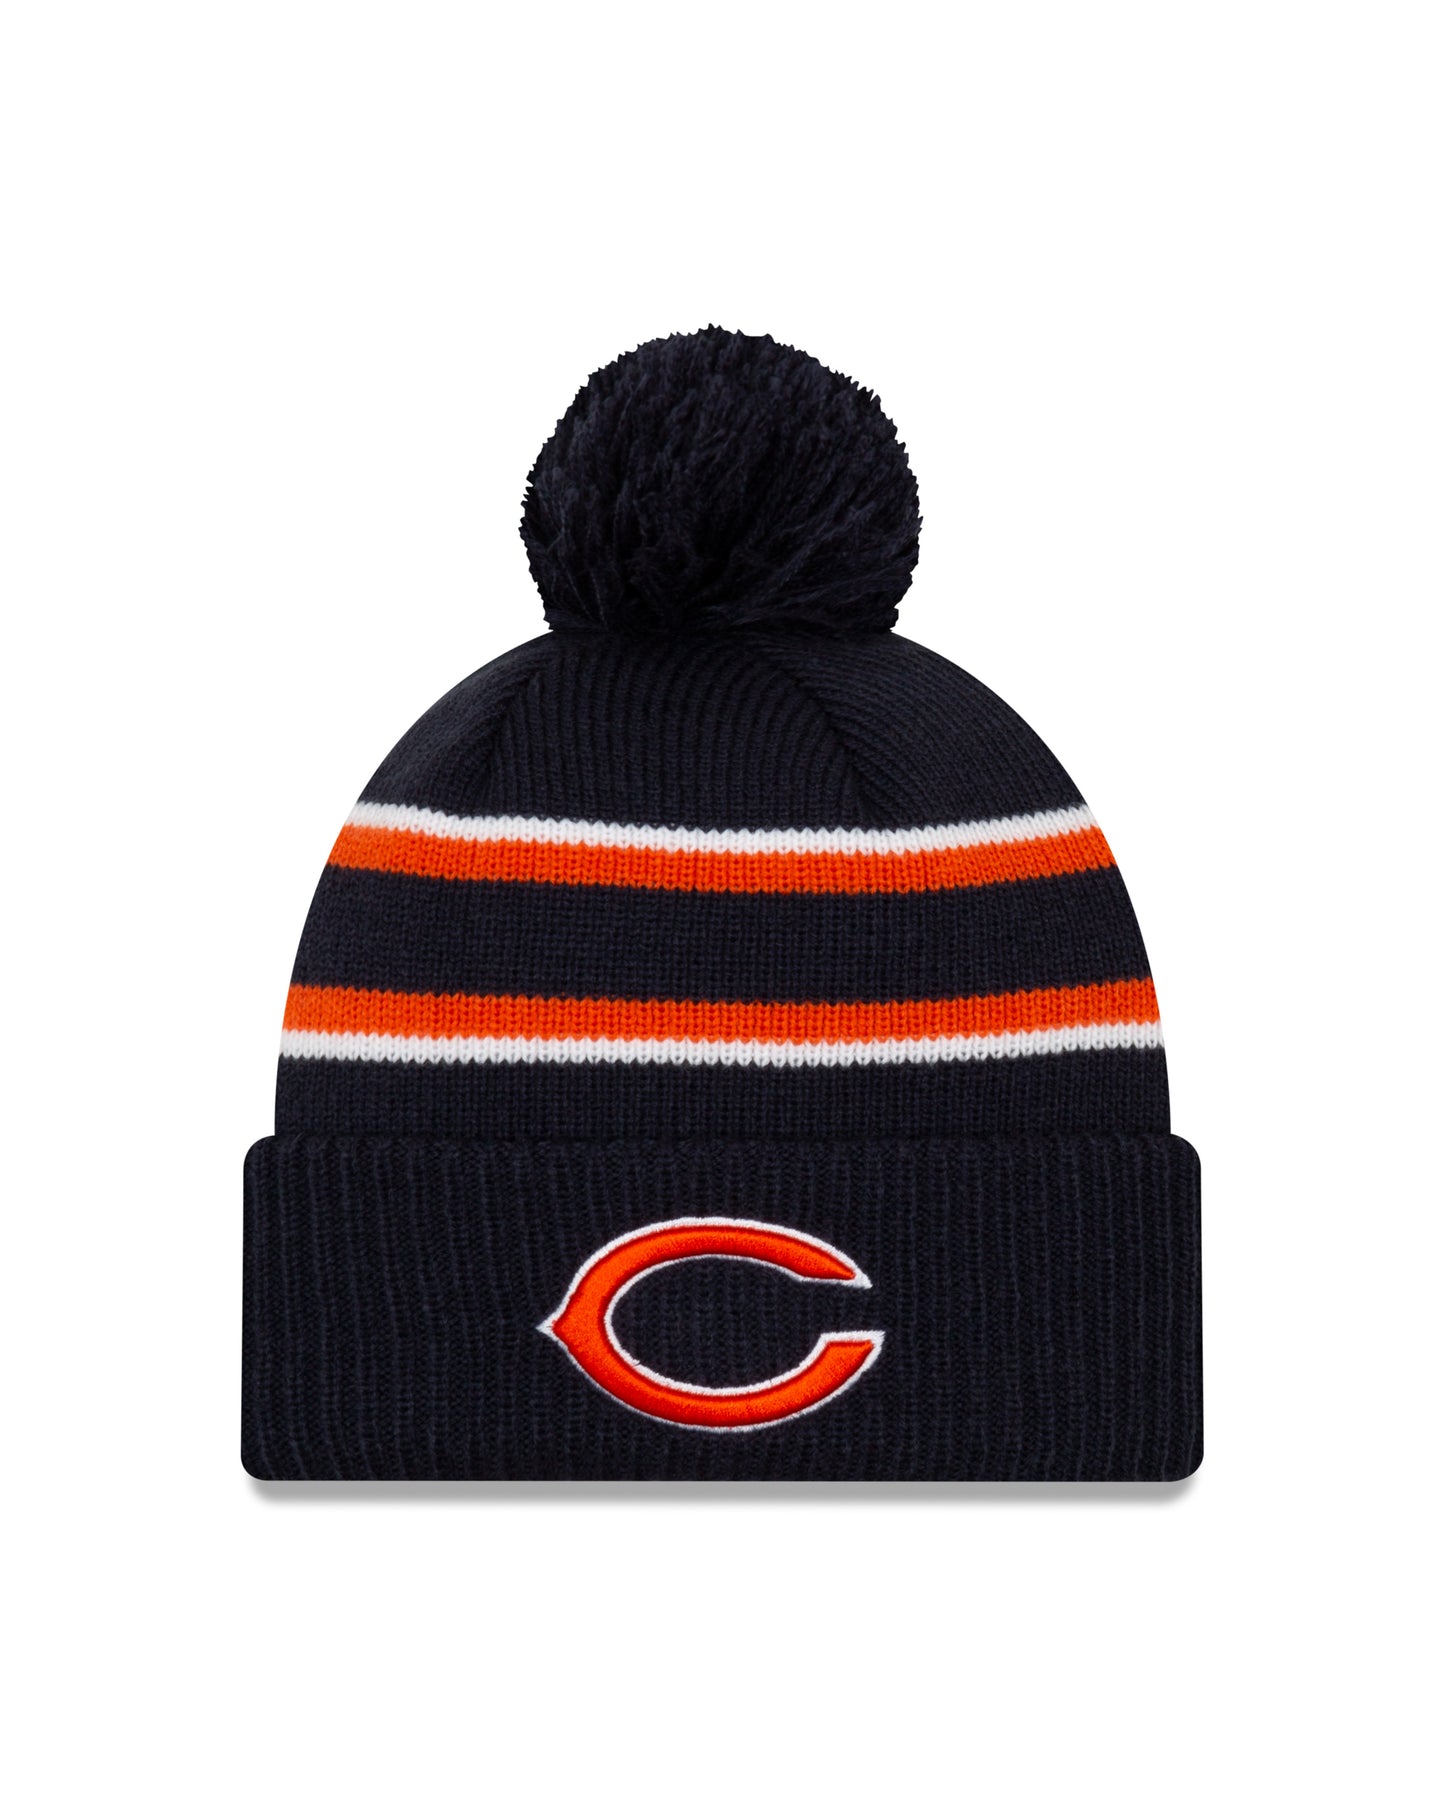 Chicago Bears New Era 2019 Thanksgiving NFL Sideline Official TD Knit Hat - Navy/Orange